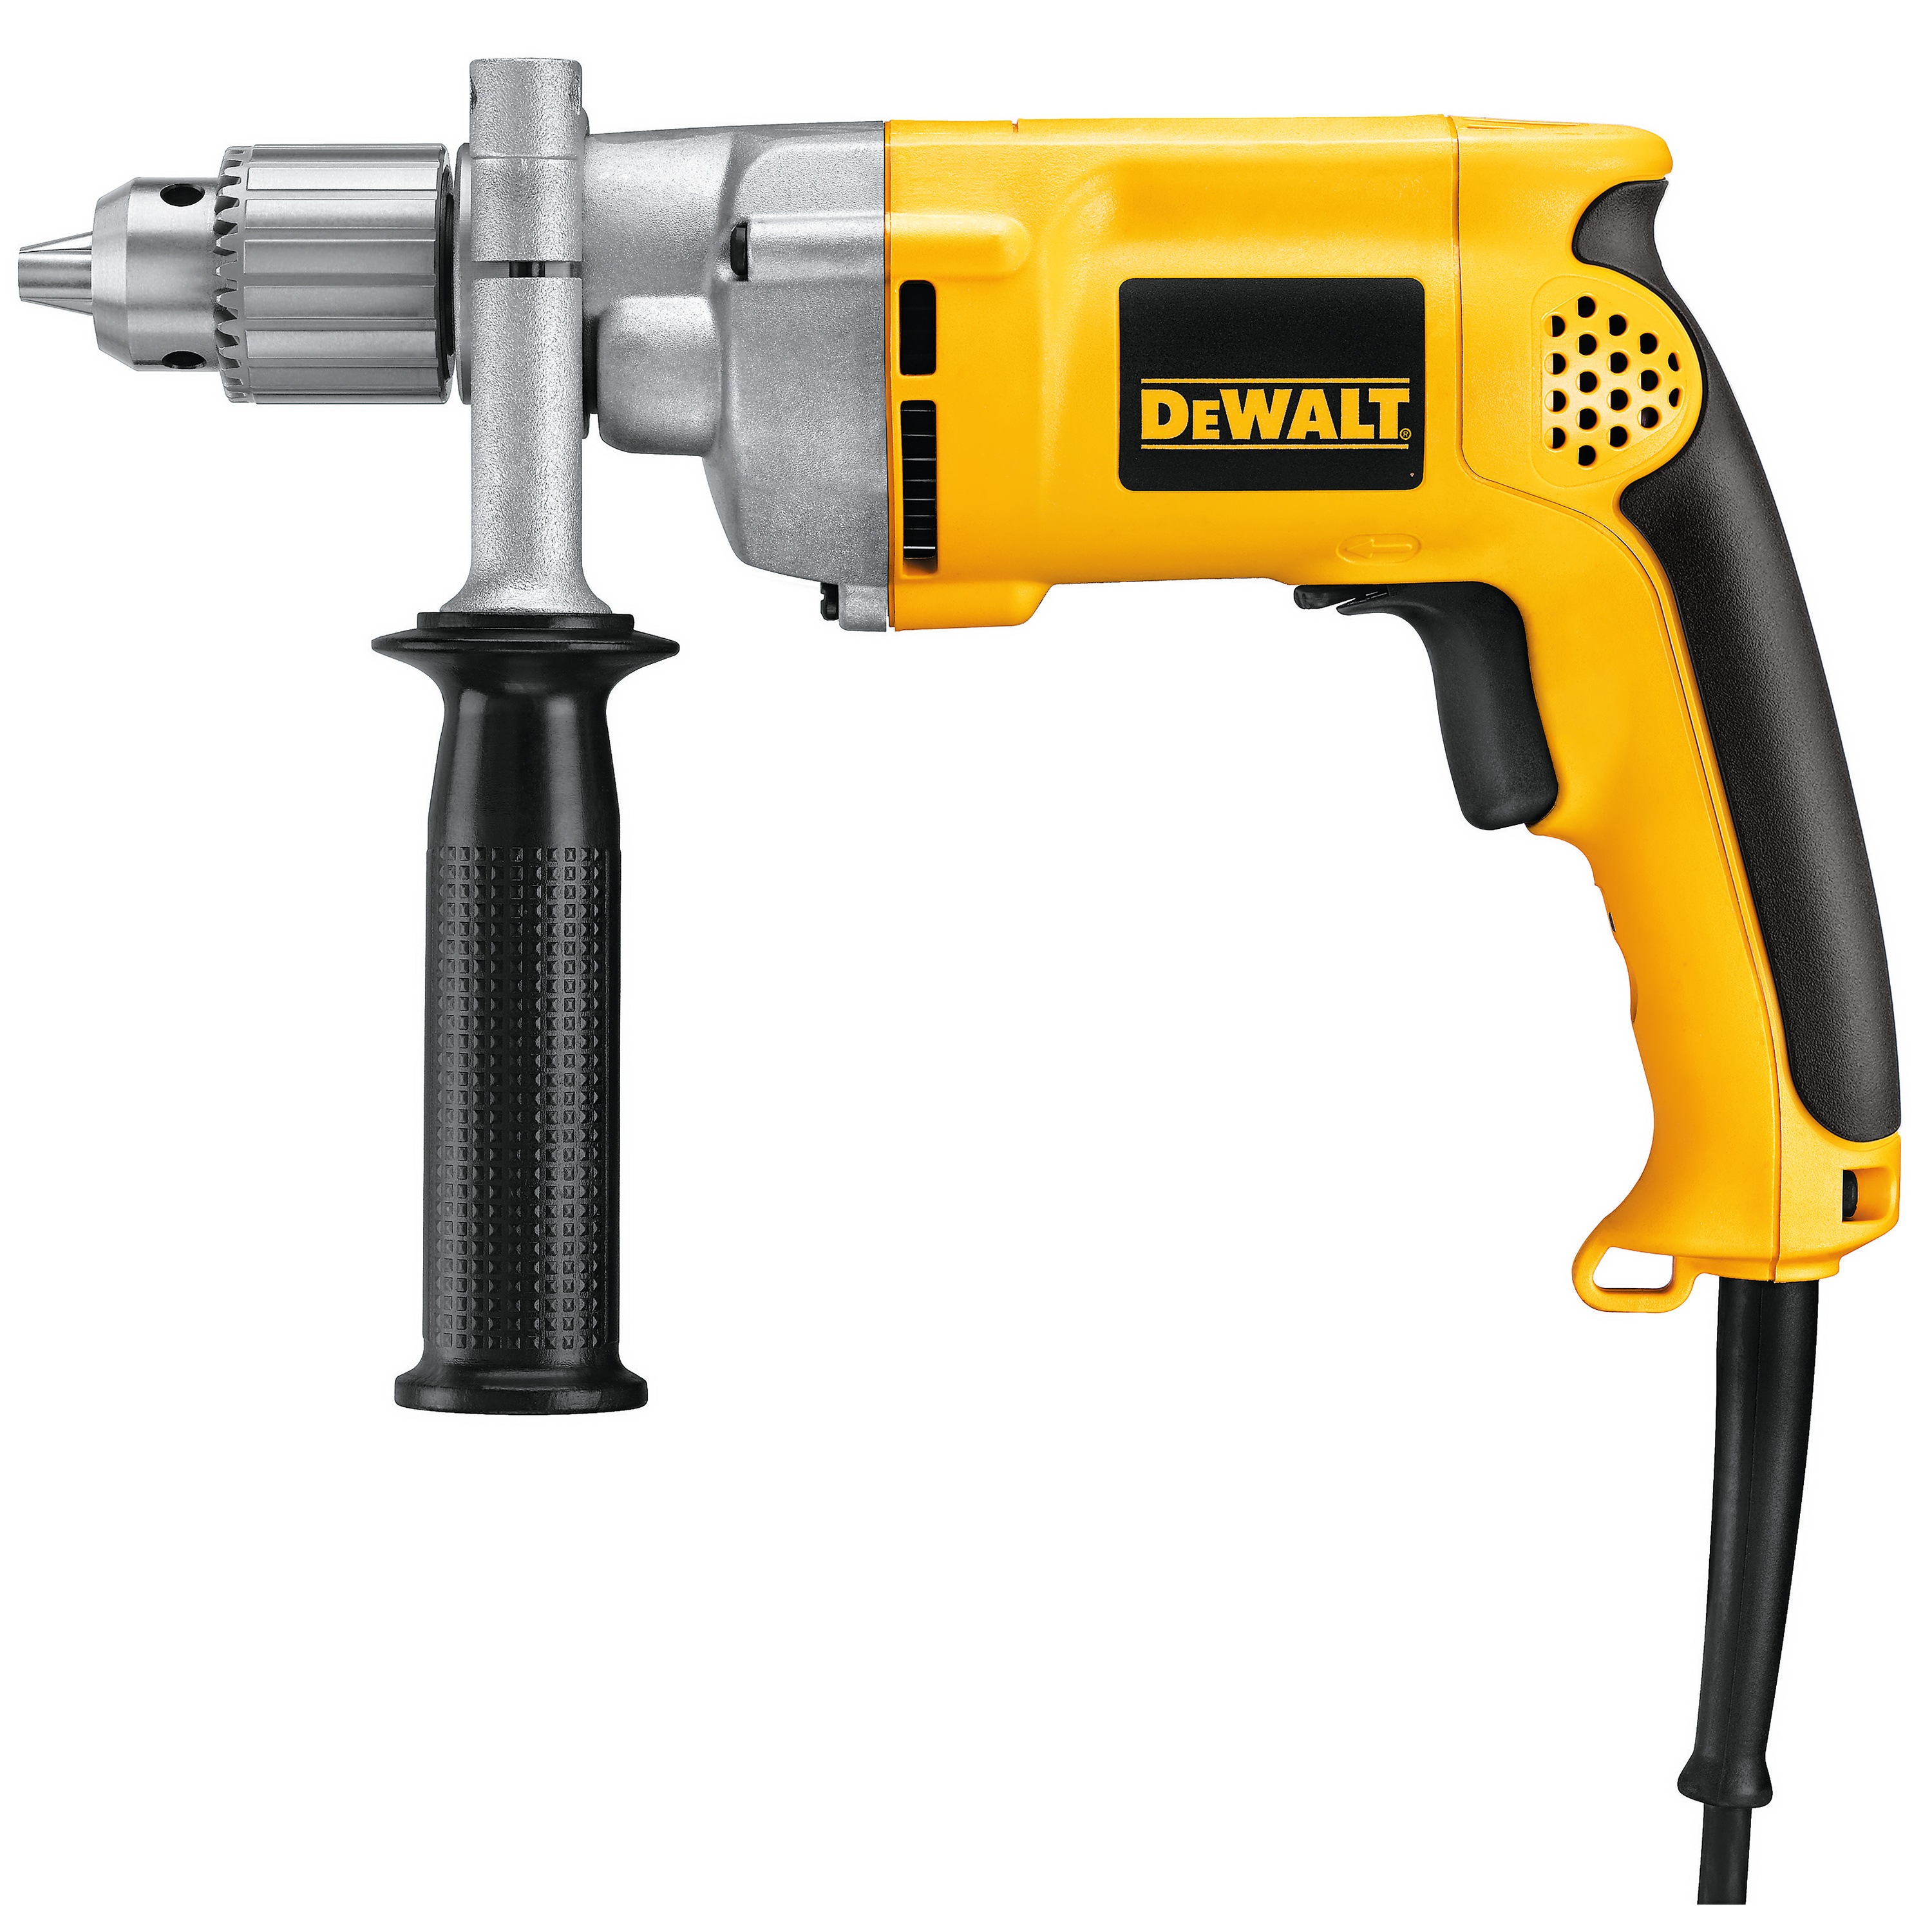 DeWalt OEM N022653 replacement hammer drill chuck key DW505 DWD024 DW511 DWD520 